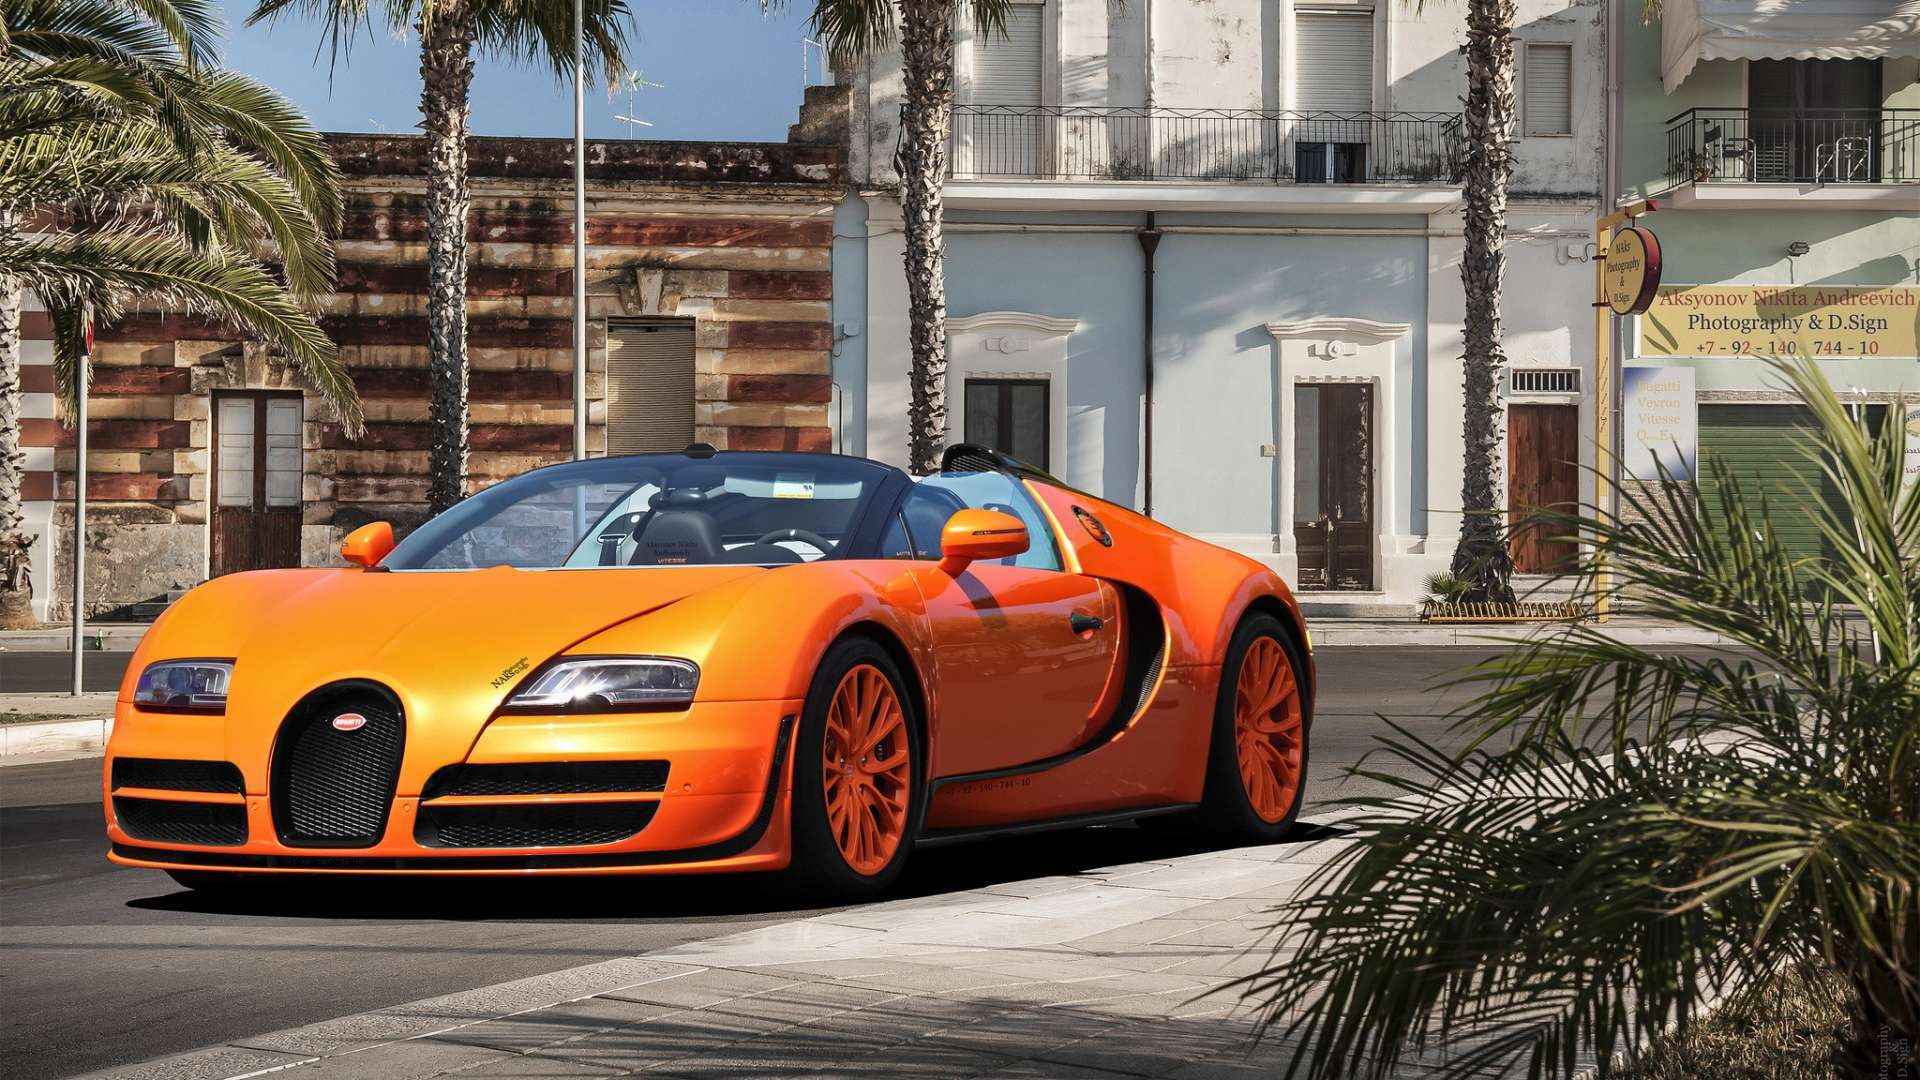 [44+] Bugatti Veyron Wallpaper 1080p on WallpaperSafari